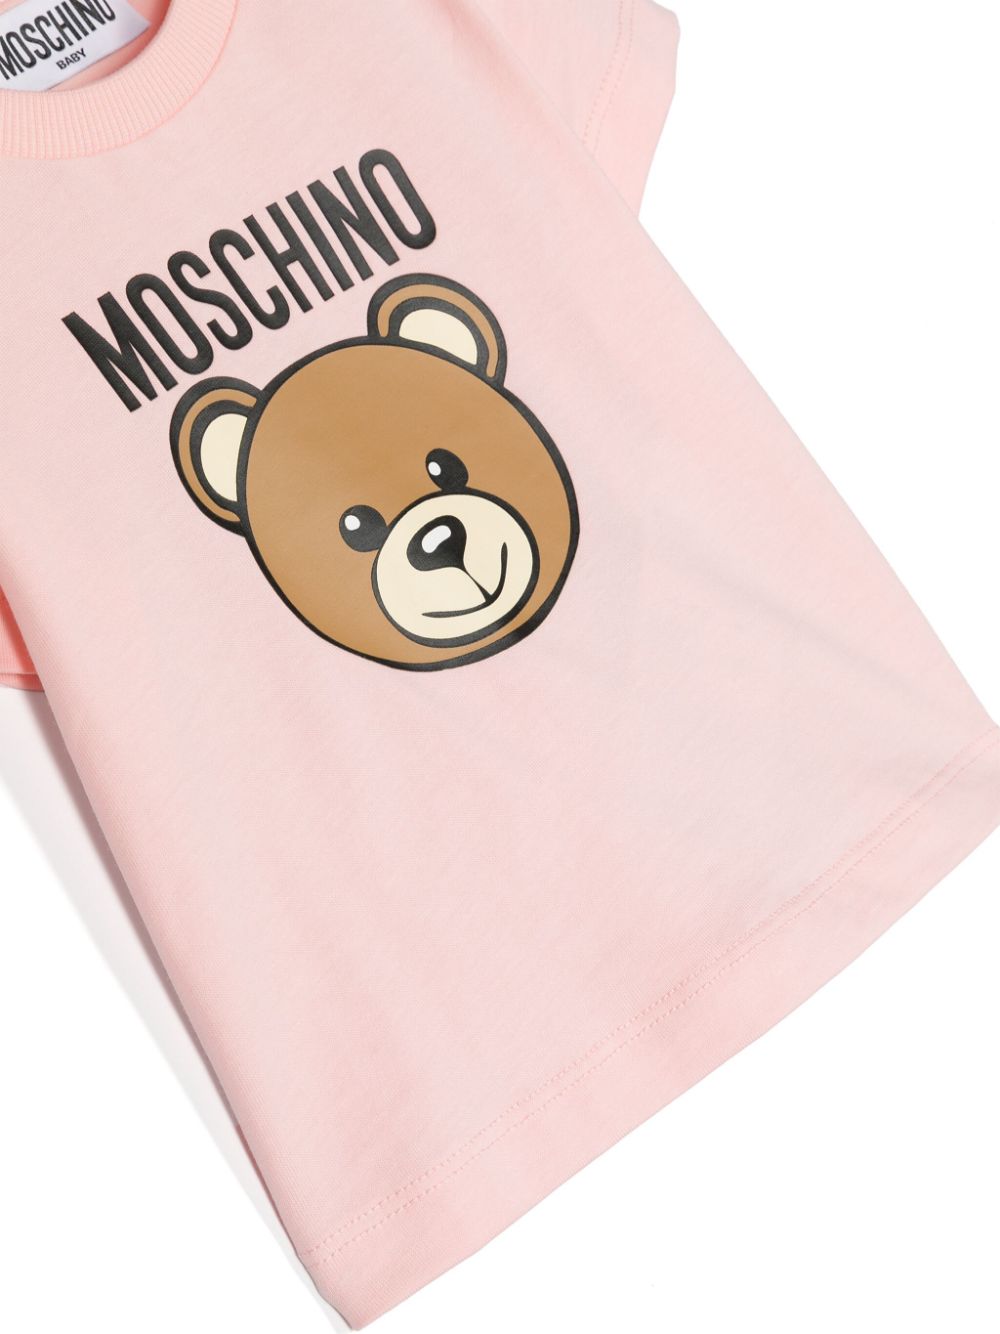 Moschino Kids t-shirt con Teddy